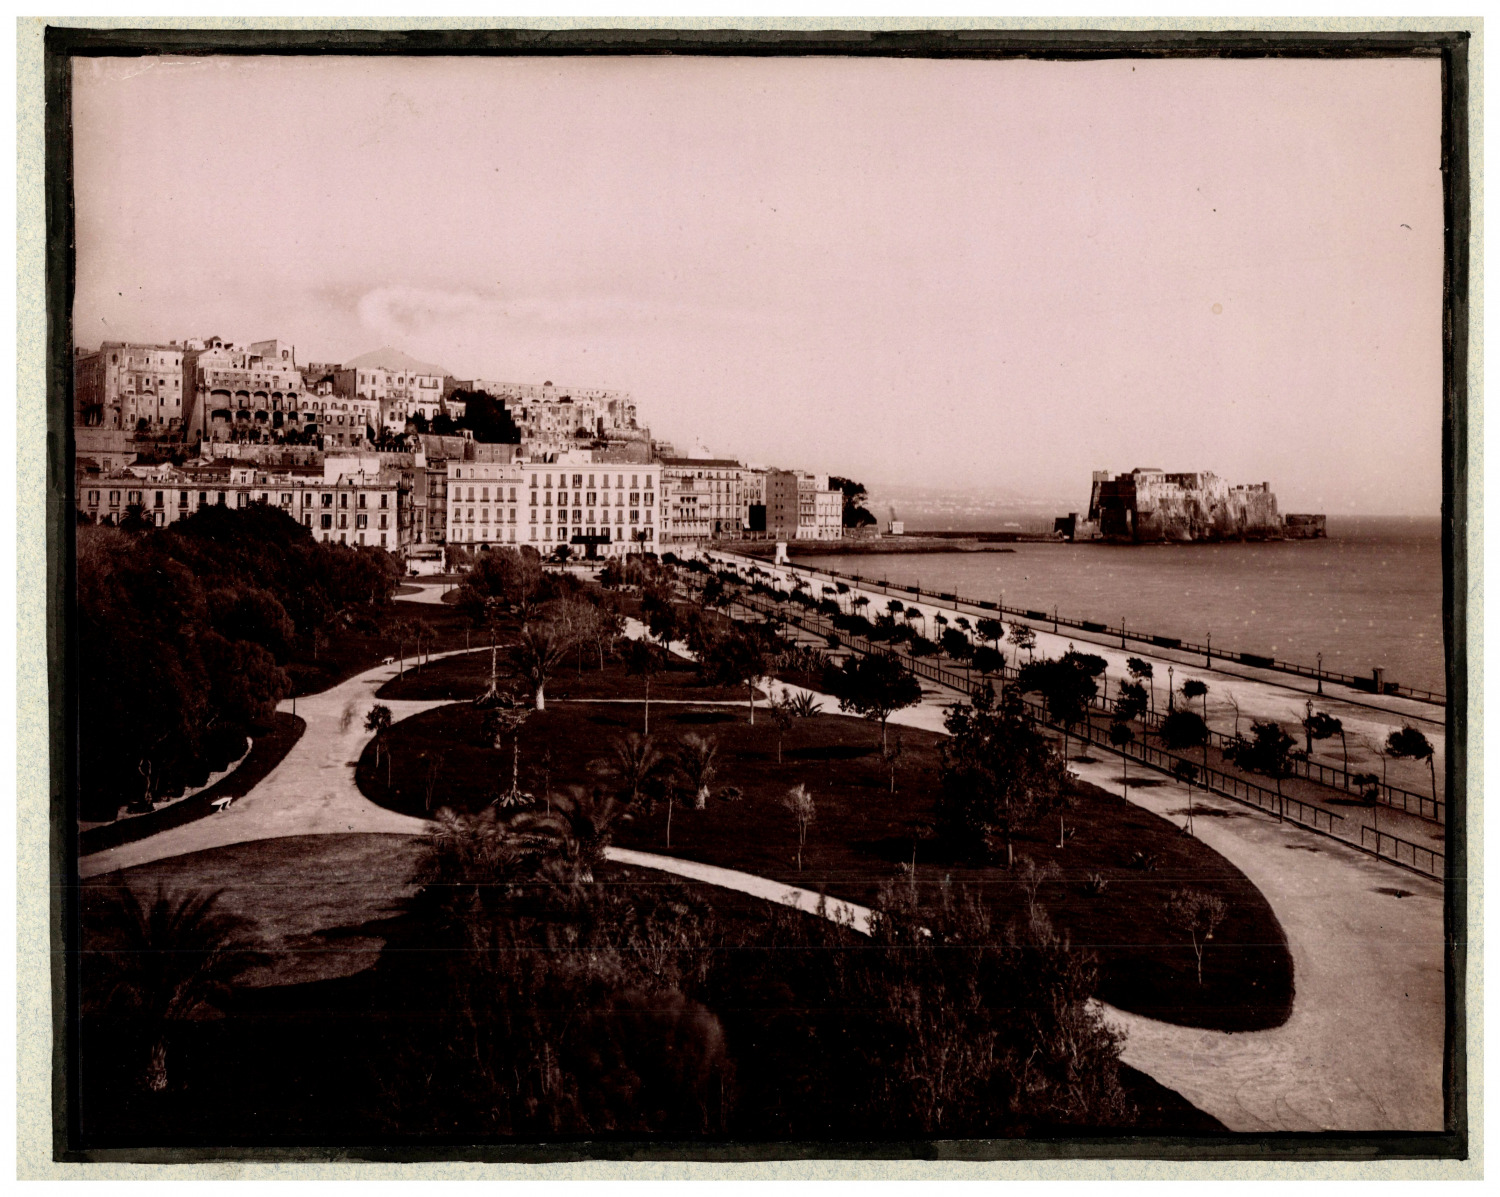 Italy, Naples, via National Vintage print, vintage print, albu print